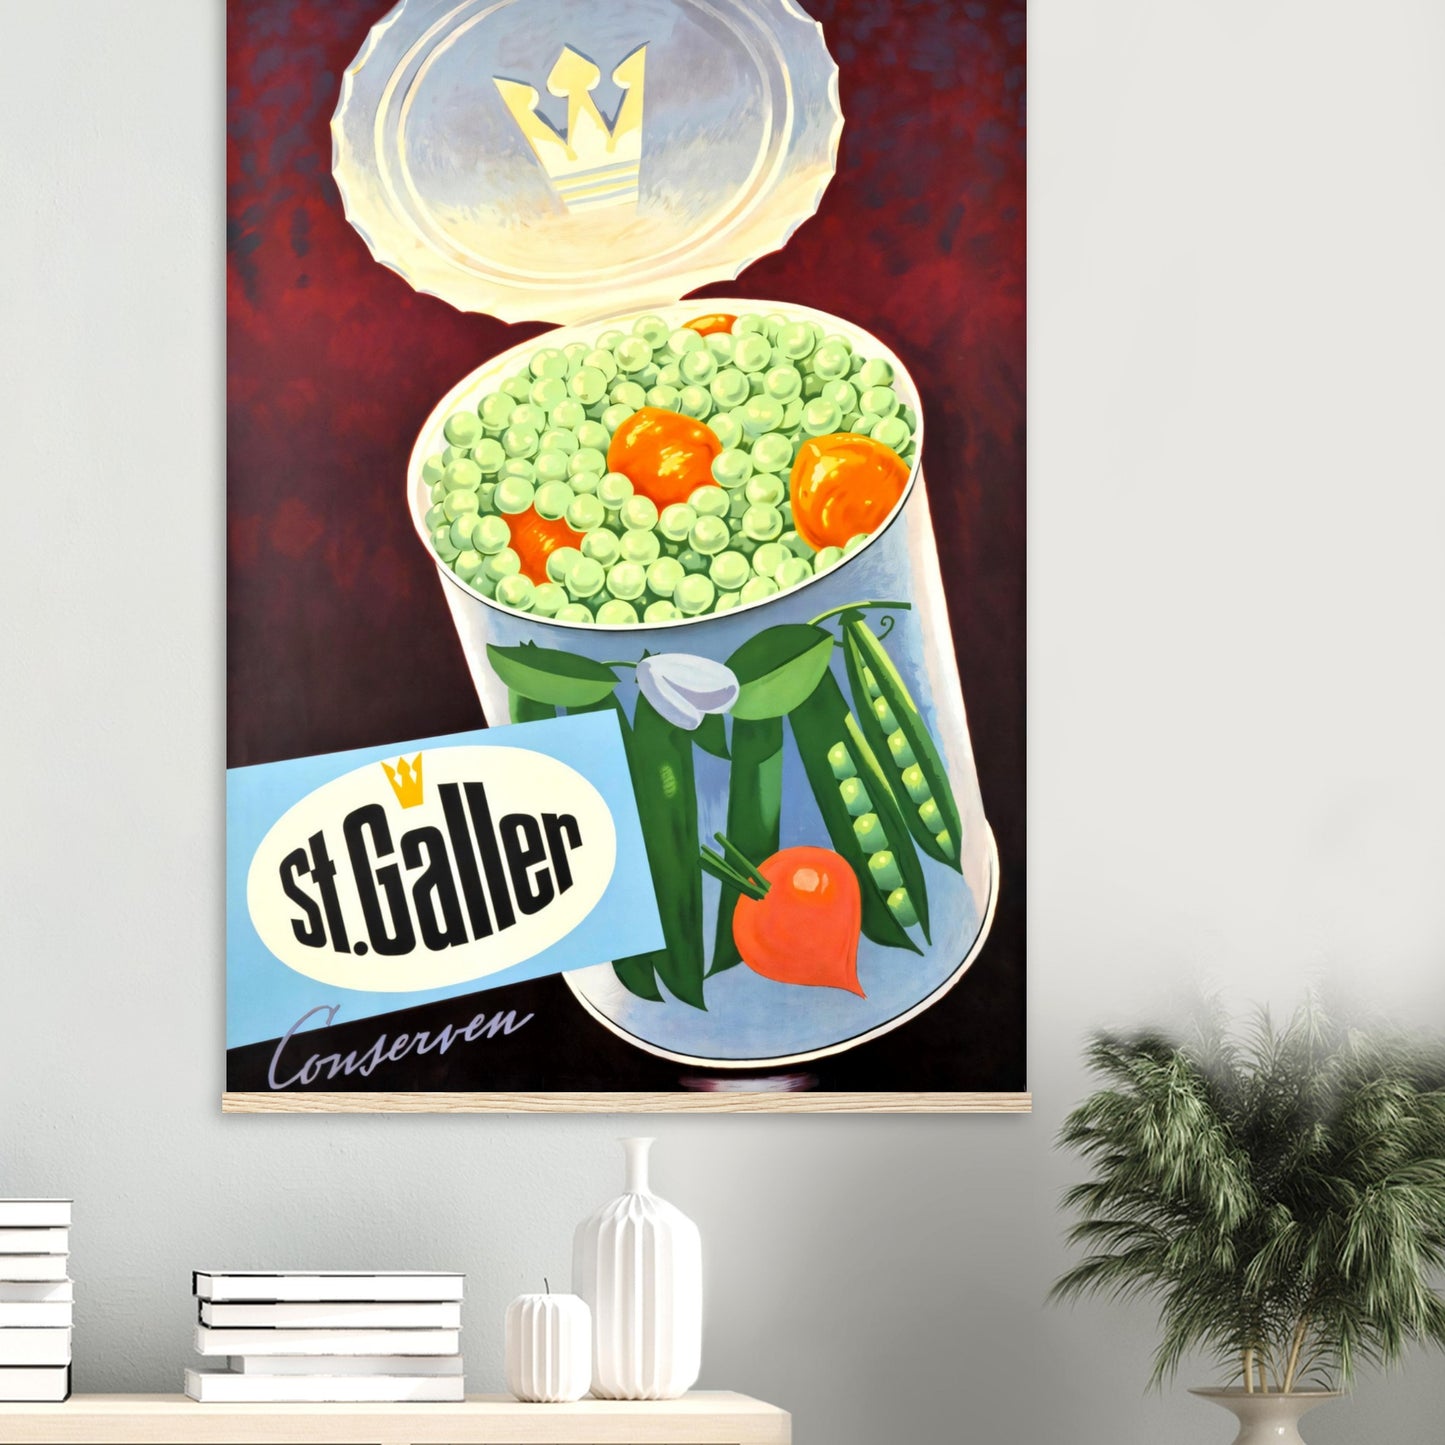 Vintage Poster Reprint, St Galler Peas, Wall Art on Premium Paper - Posterify